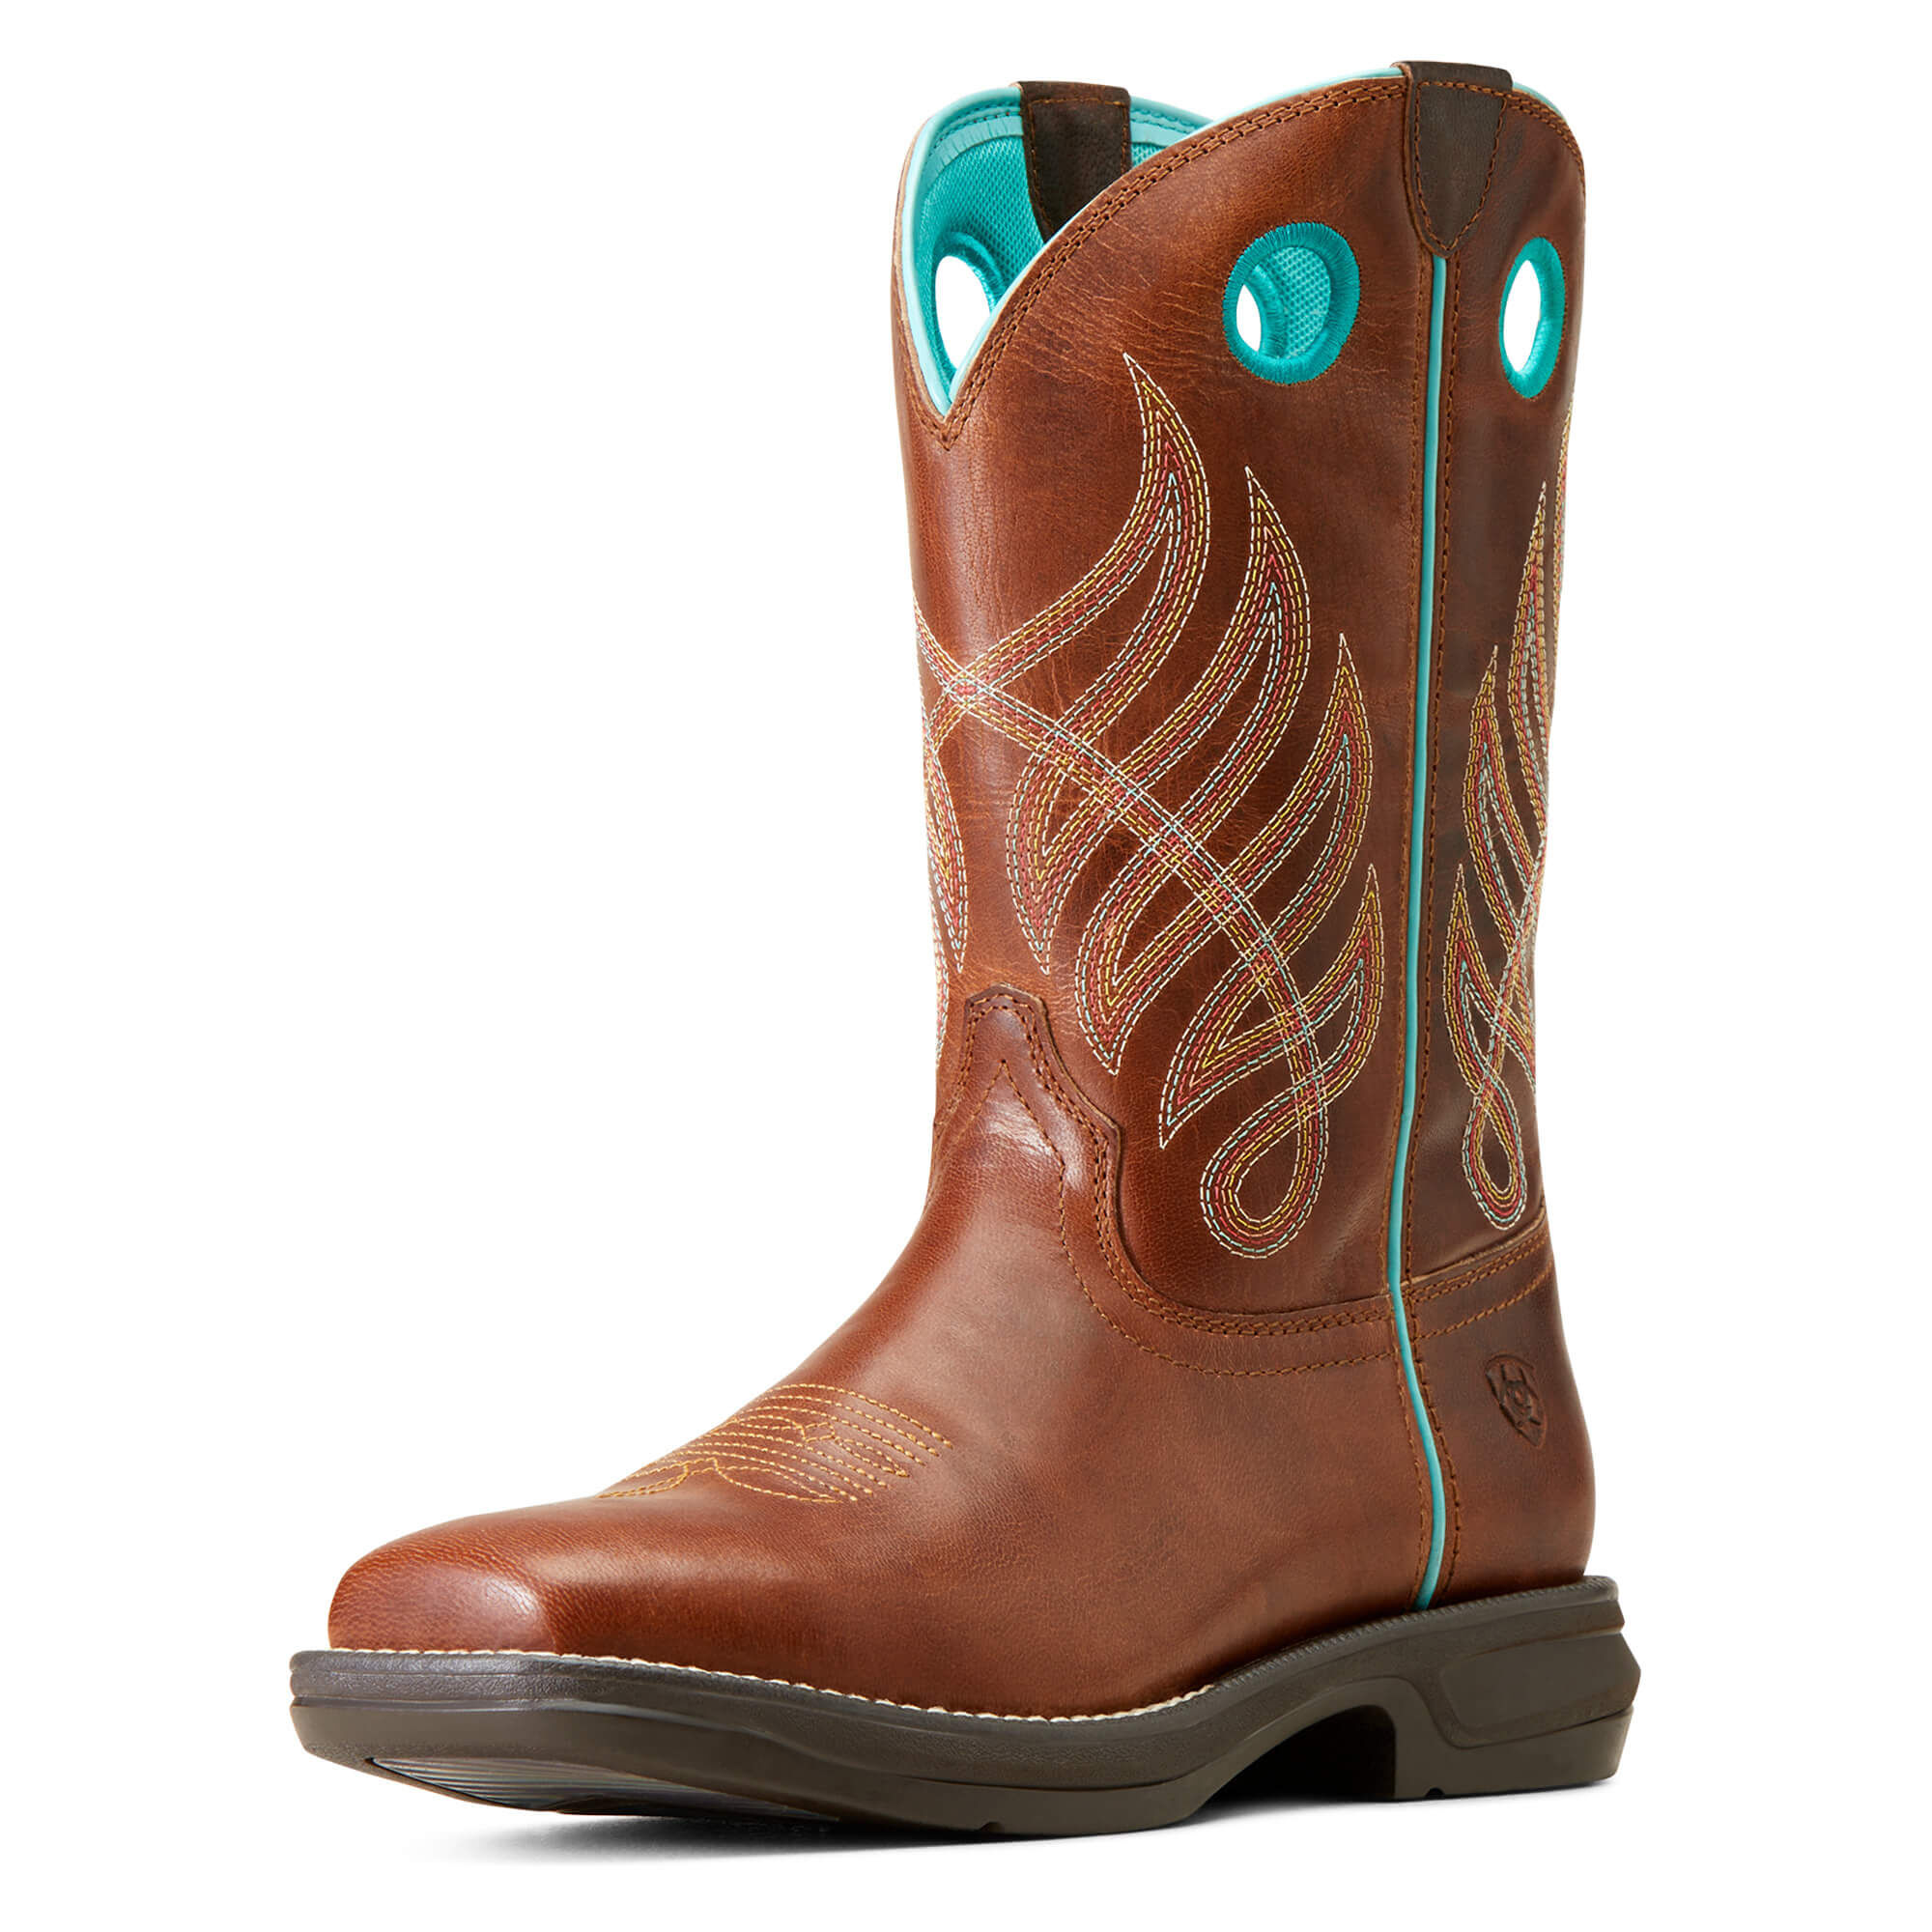 Women's Anthem Myra Western Boots in Arizona Canyon, Size: 5.5 B / Medium  by Ariat